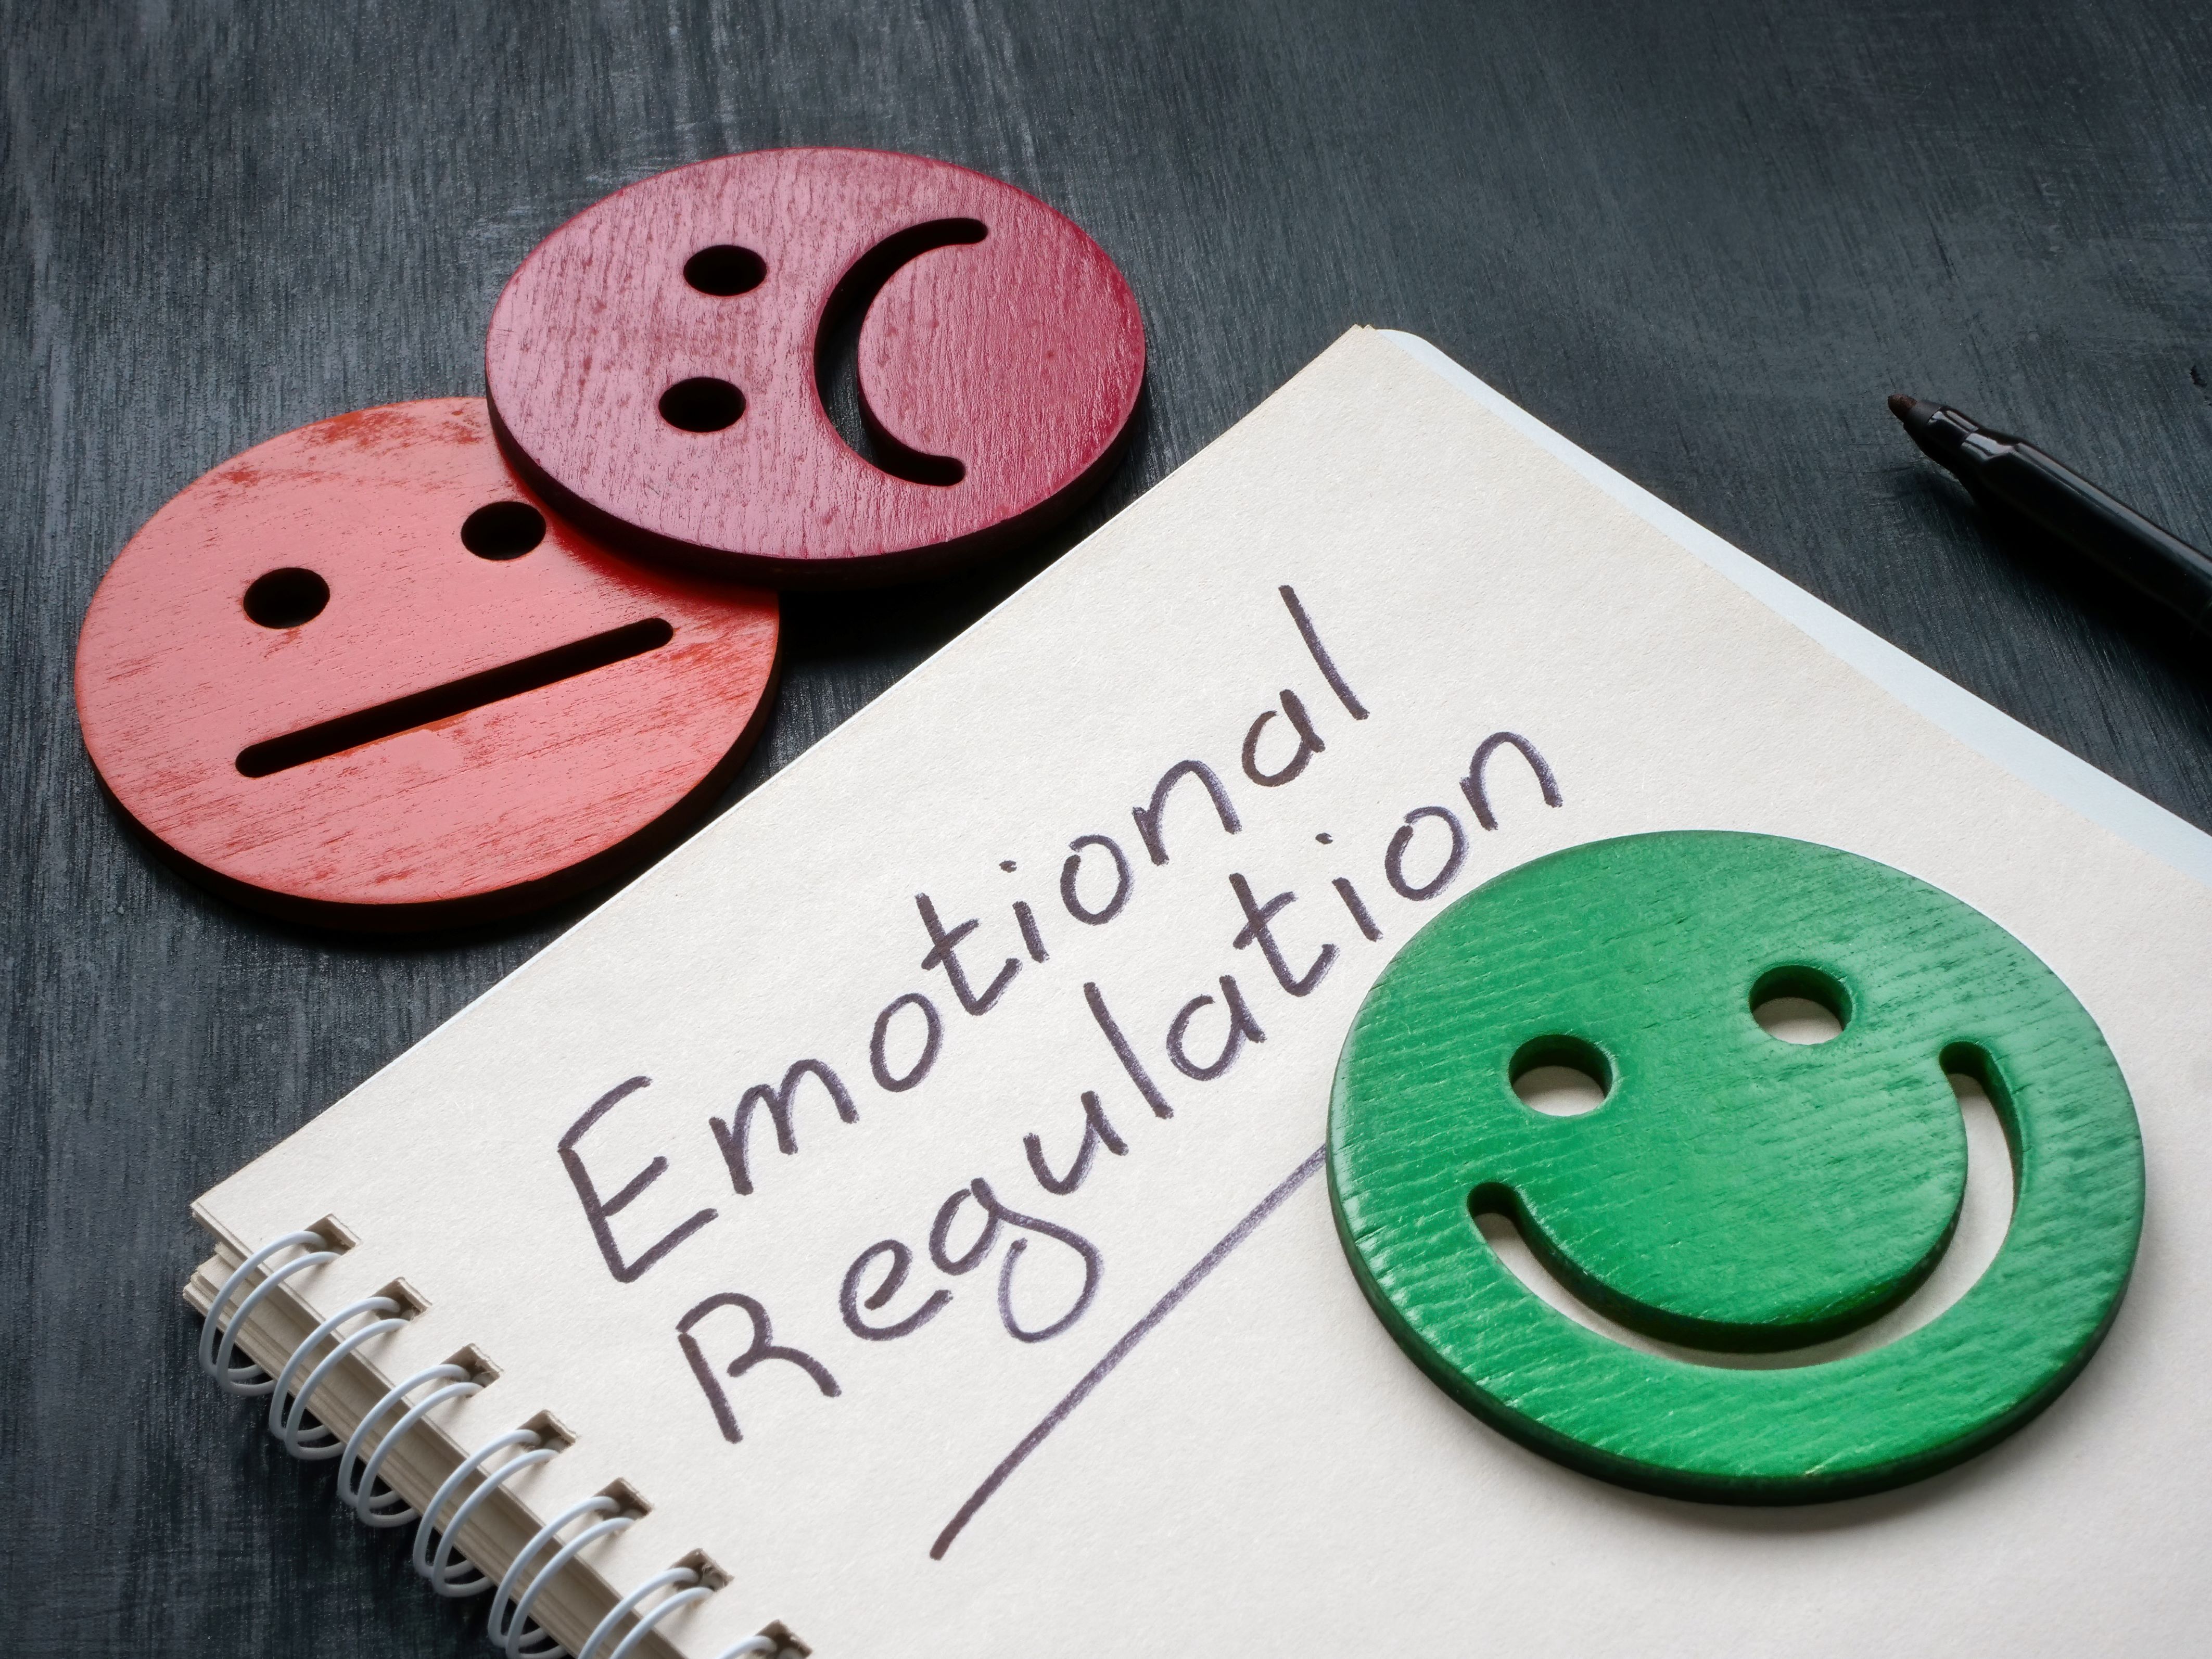 Emotion Regulation Toolbox